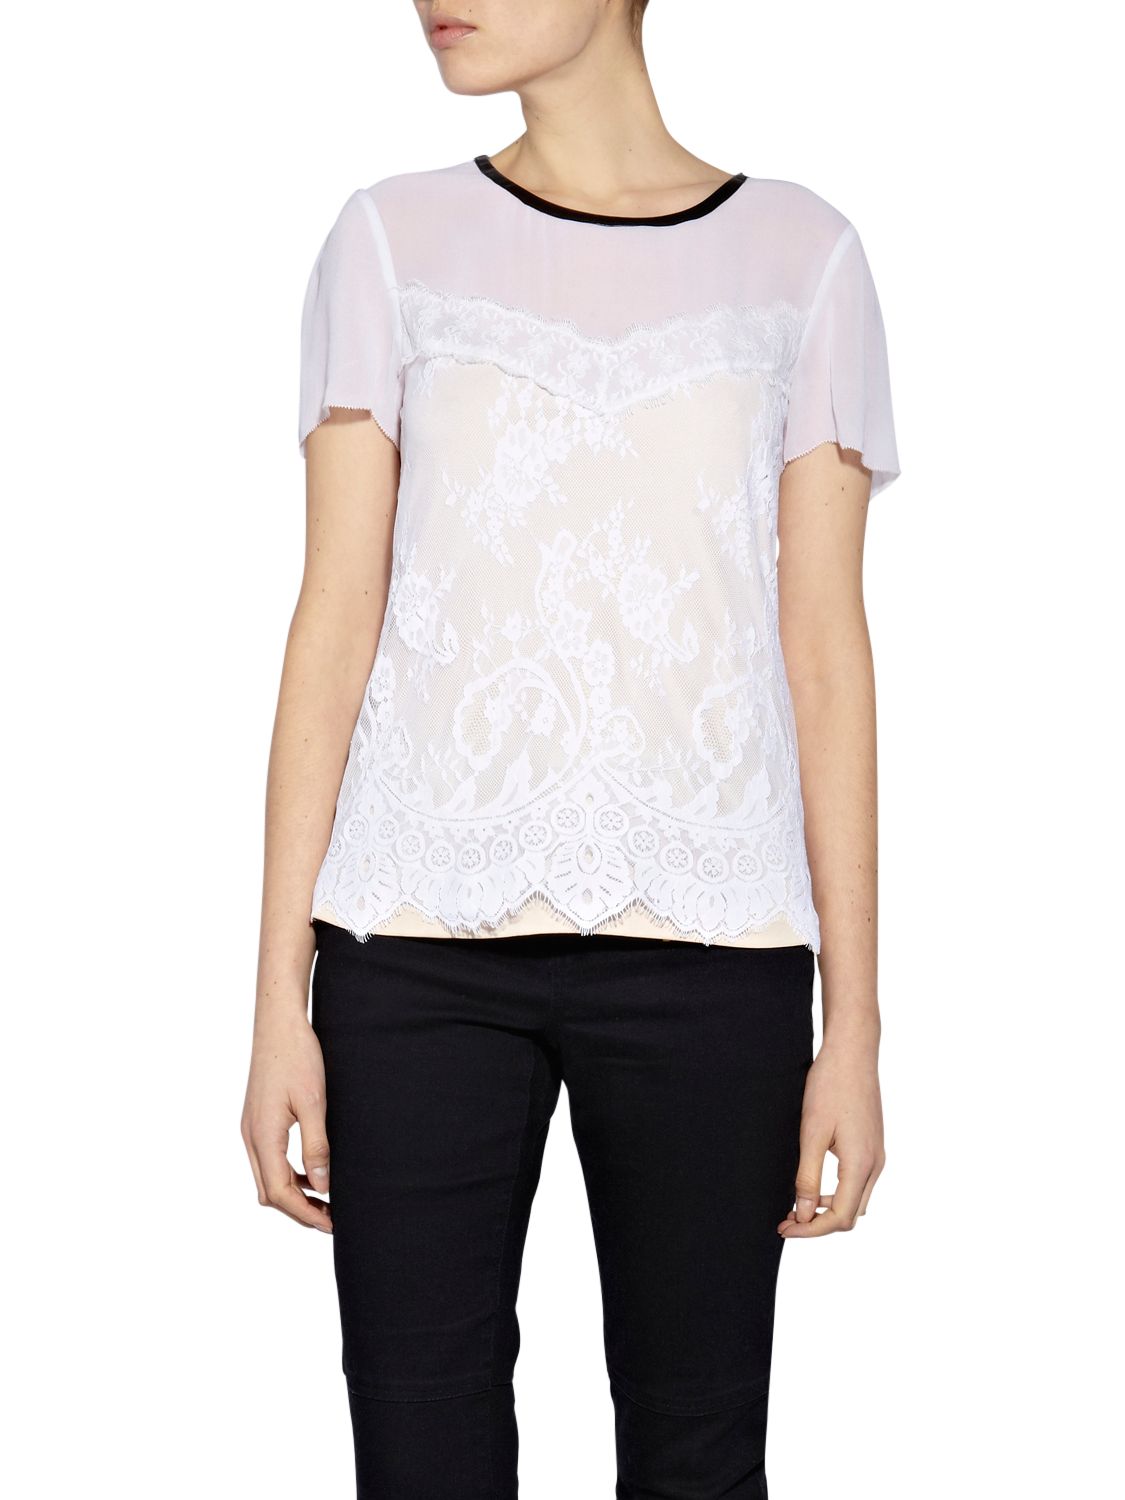 Leather Trim Lace T-Shirt, White